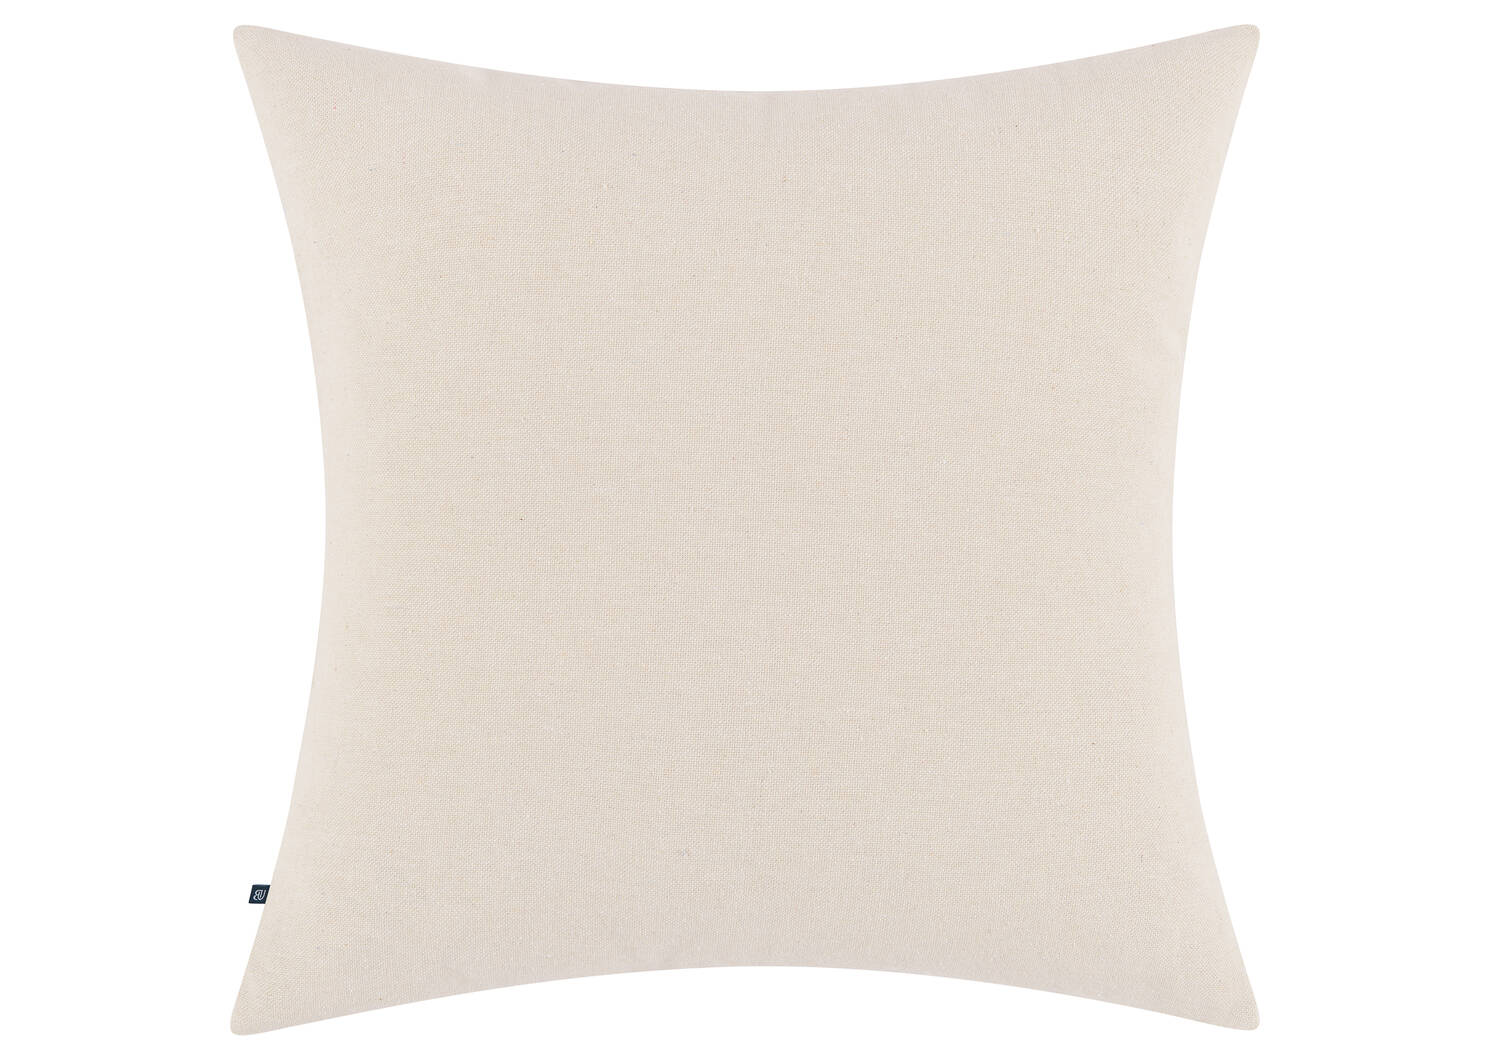 Elvio Pillow 20x20 Natural/Terracotta